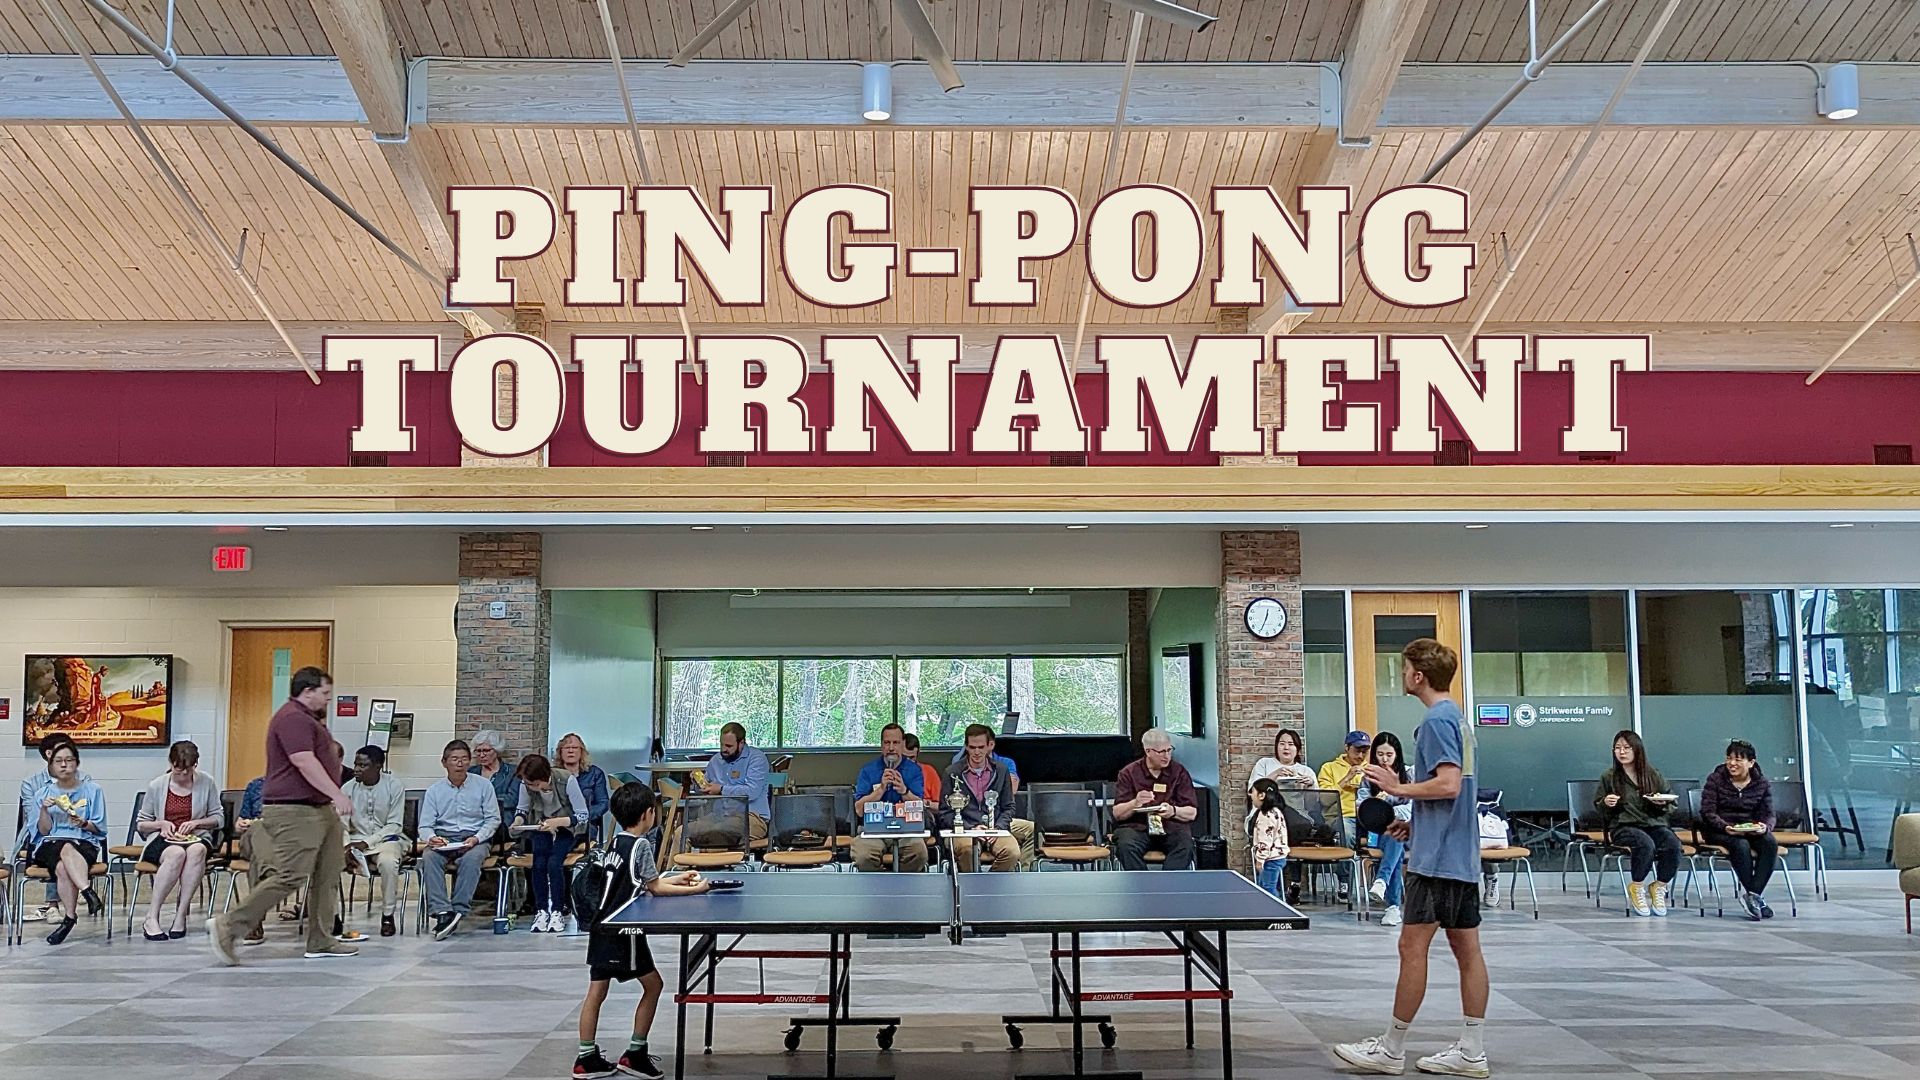 Ping-Pong tournament